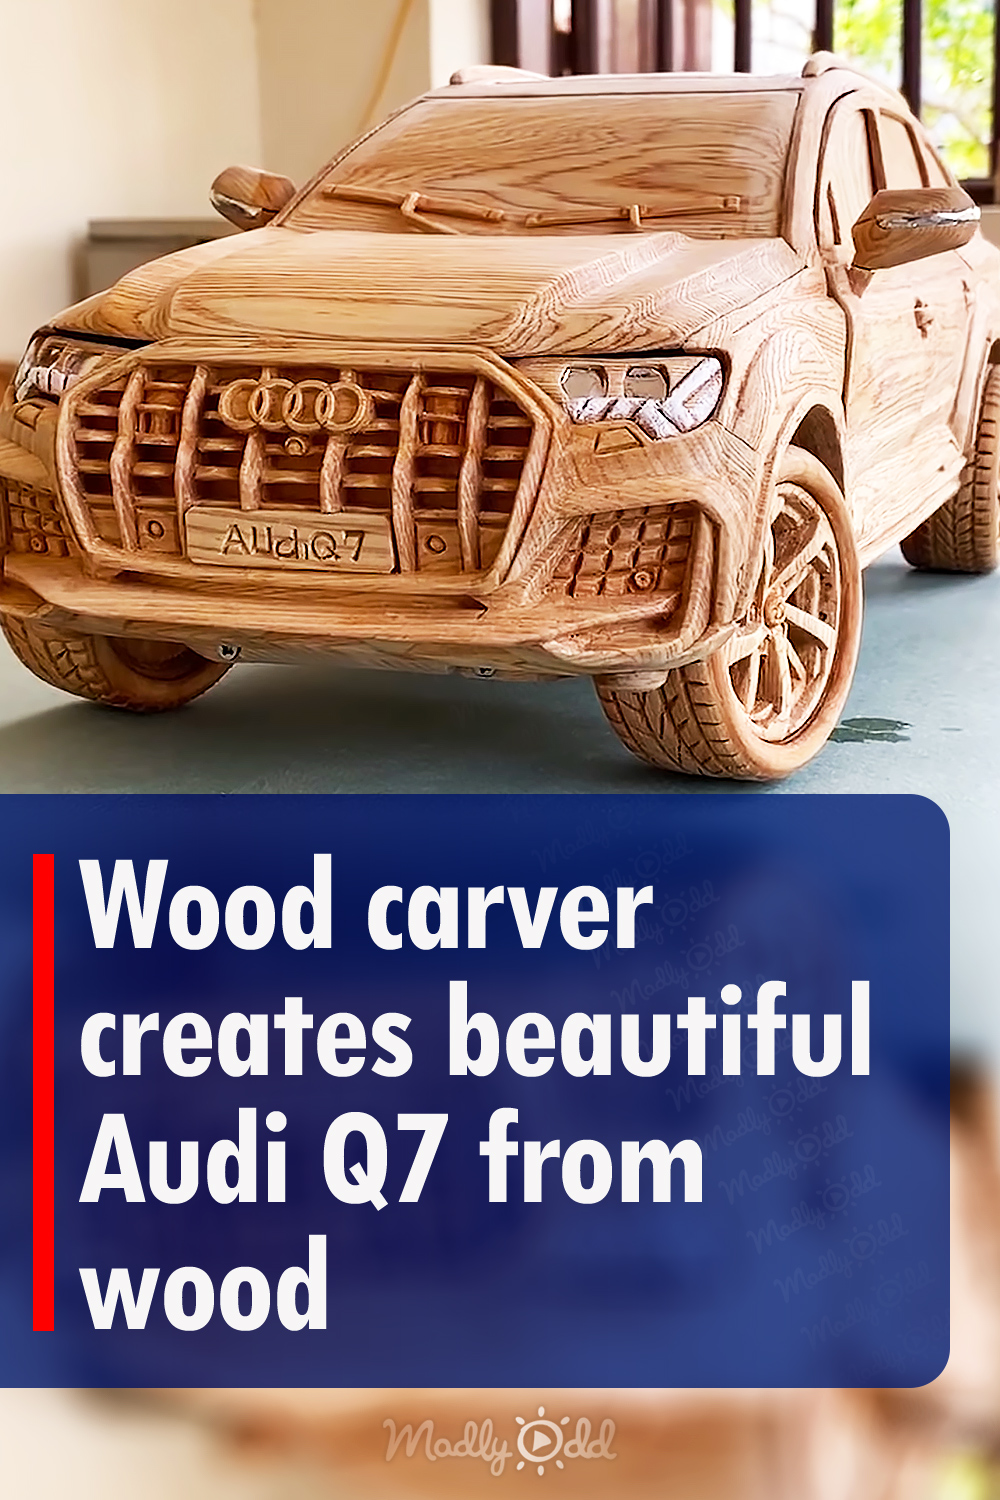 Wood carver creates beautiful Audi Q7 from wood